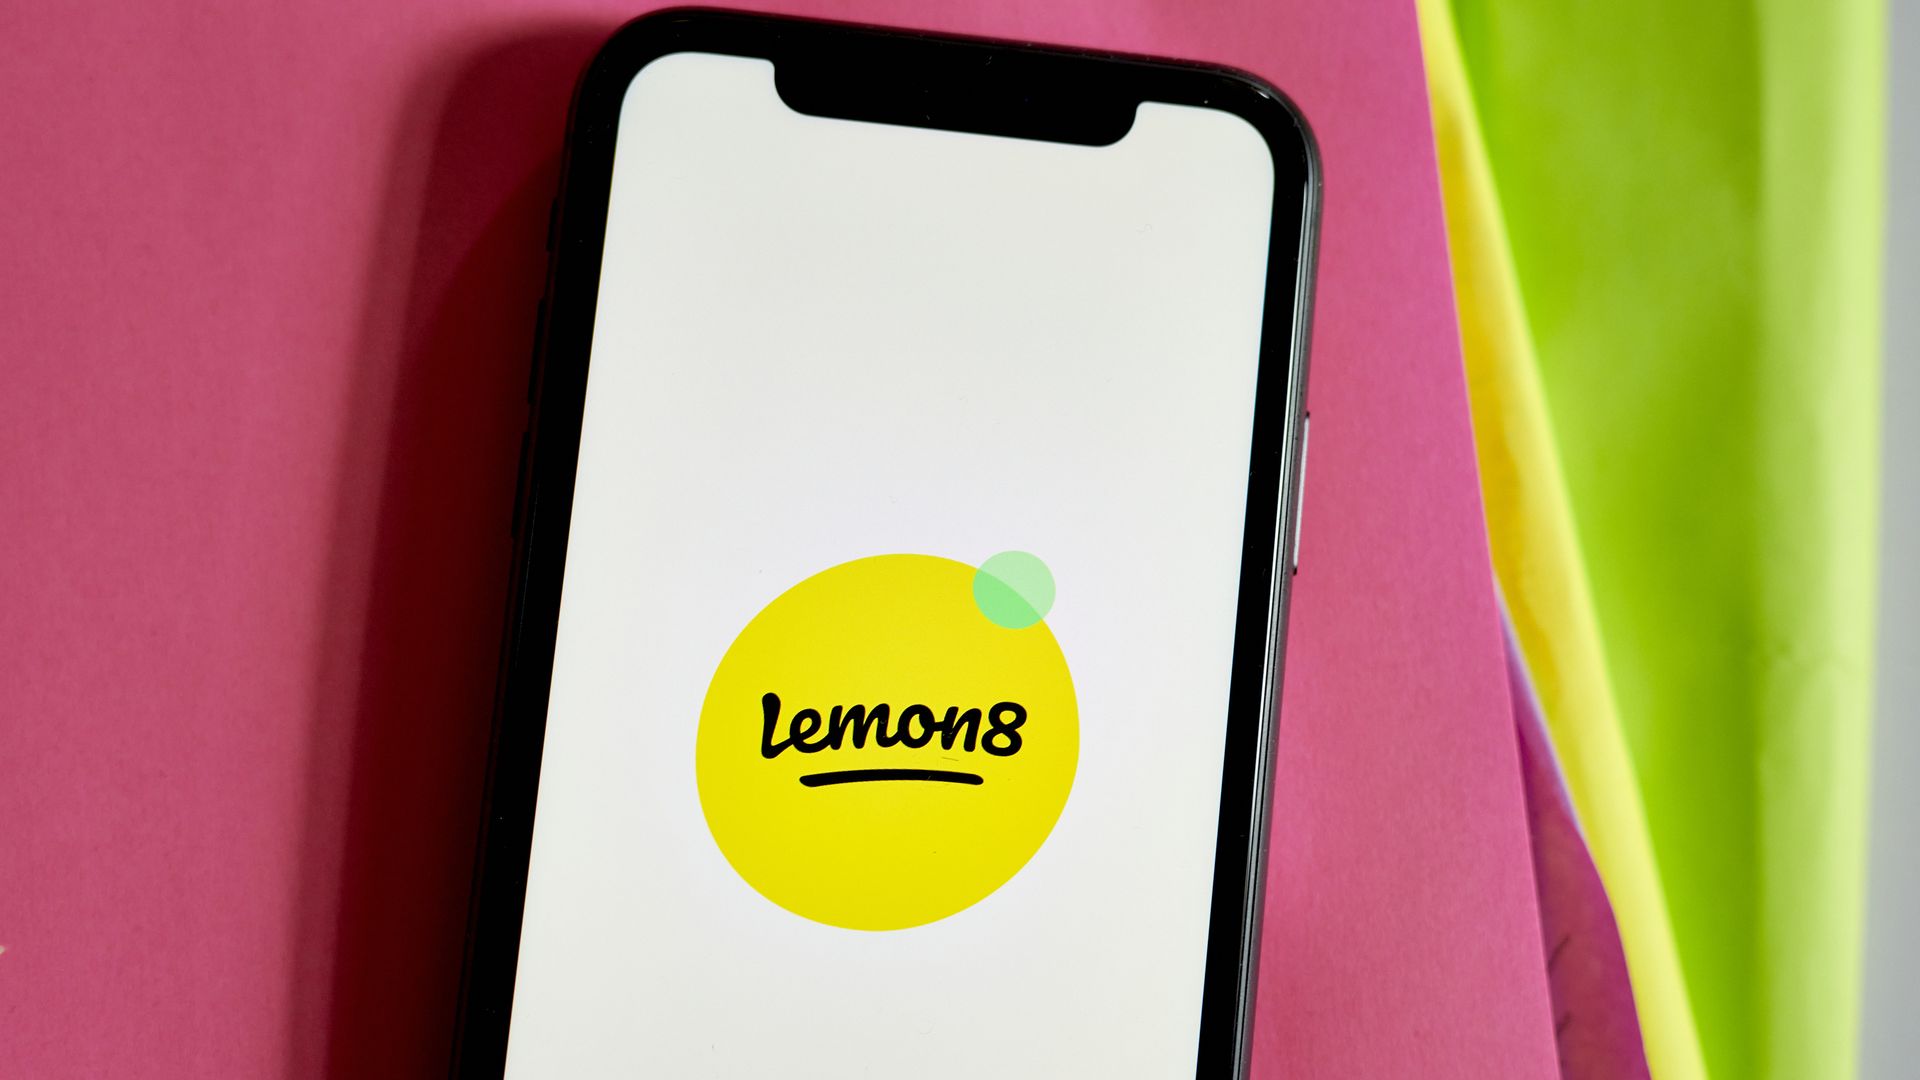 Lemon8 on a phone